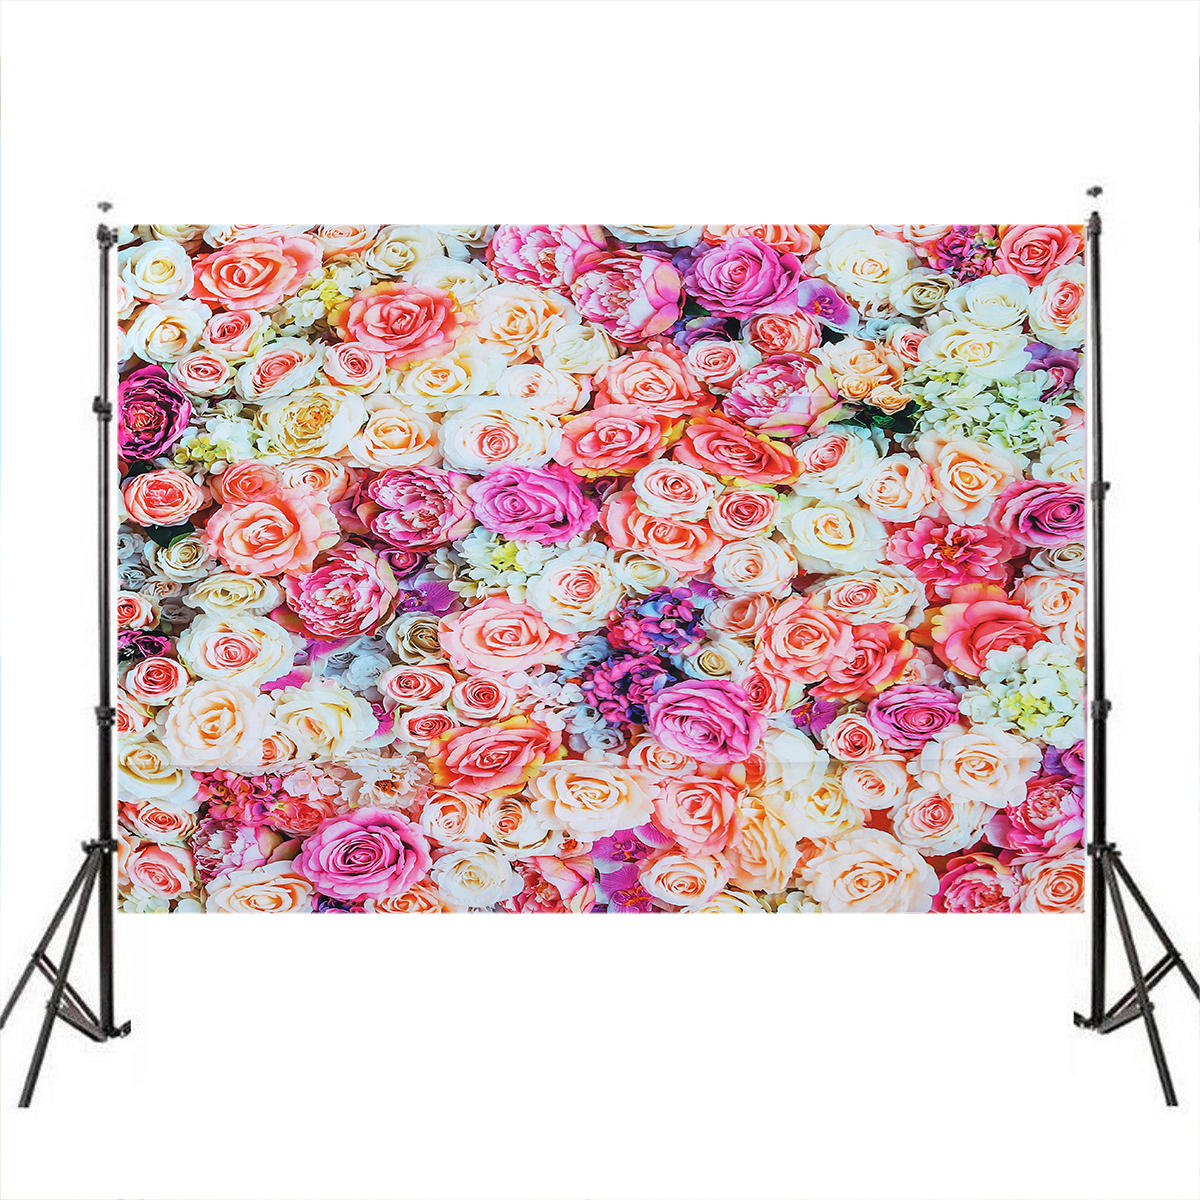 

3x5FT 5x7FT Vinyl Flower Rose Wall Photography Backdrop Background Studio Prop